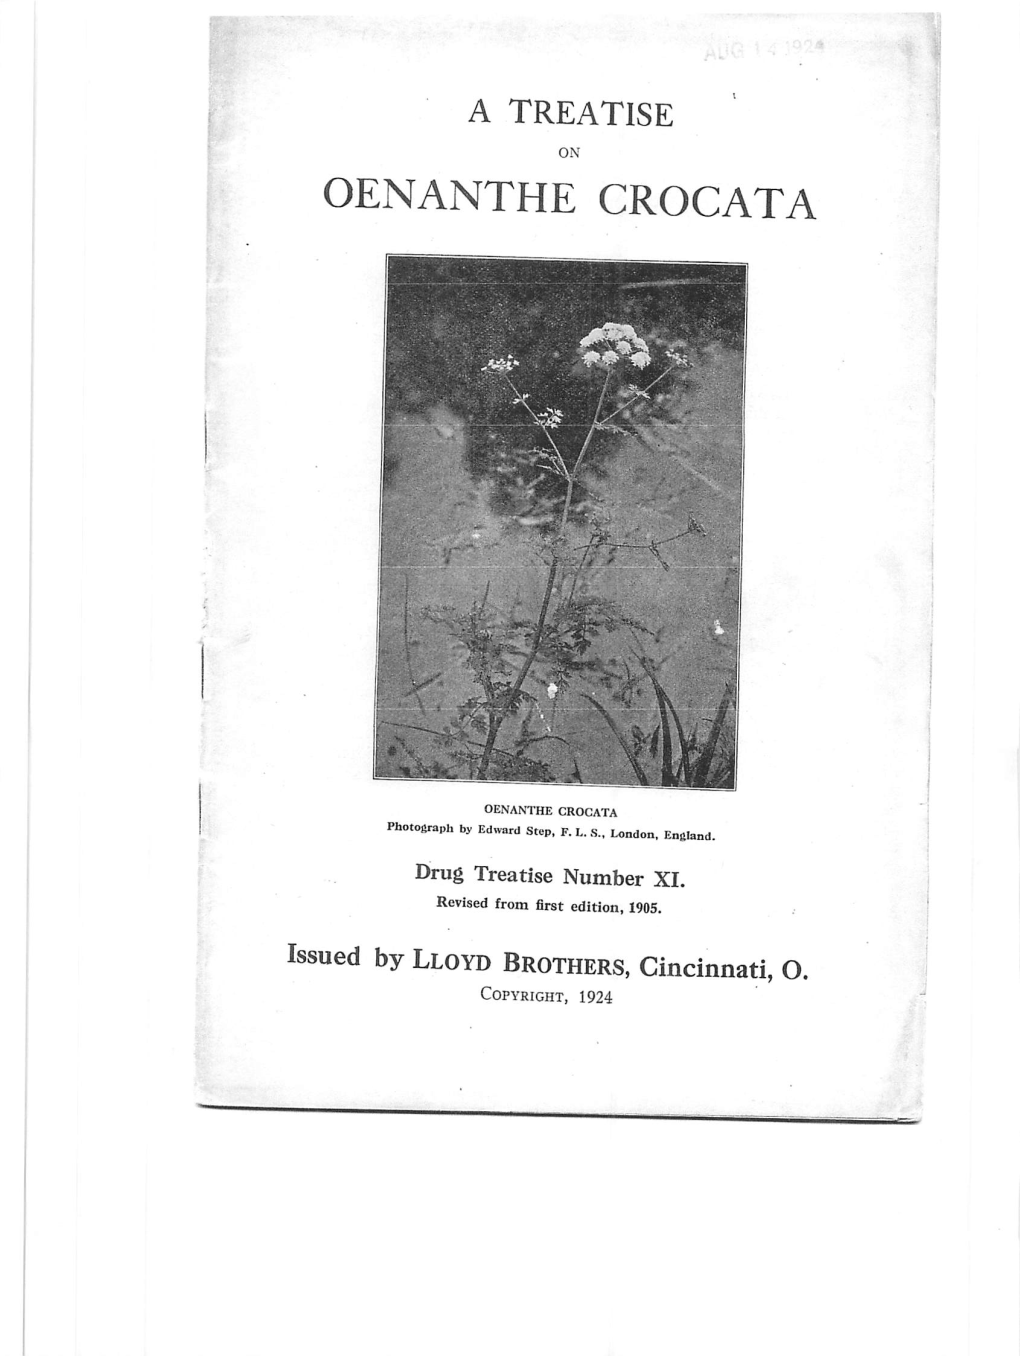 A Treatise on Oenanthe Crocata, 1924